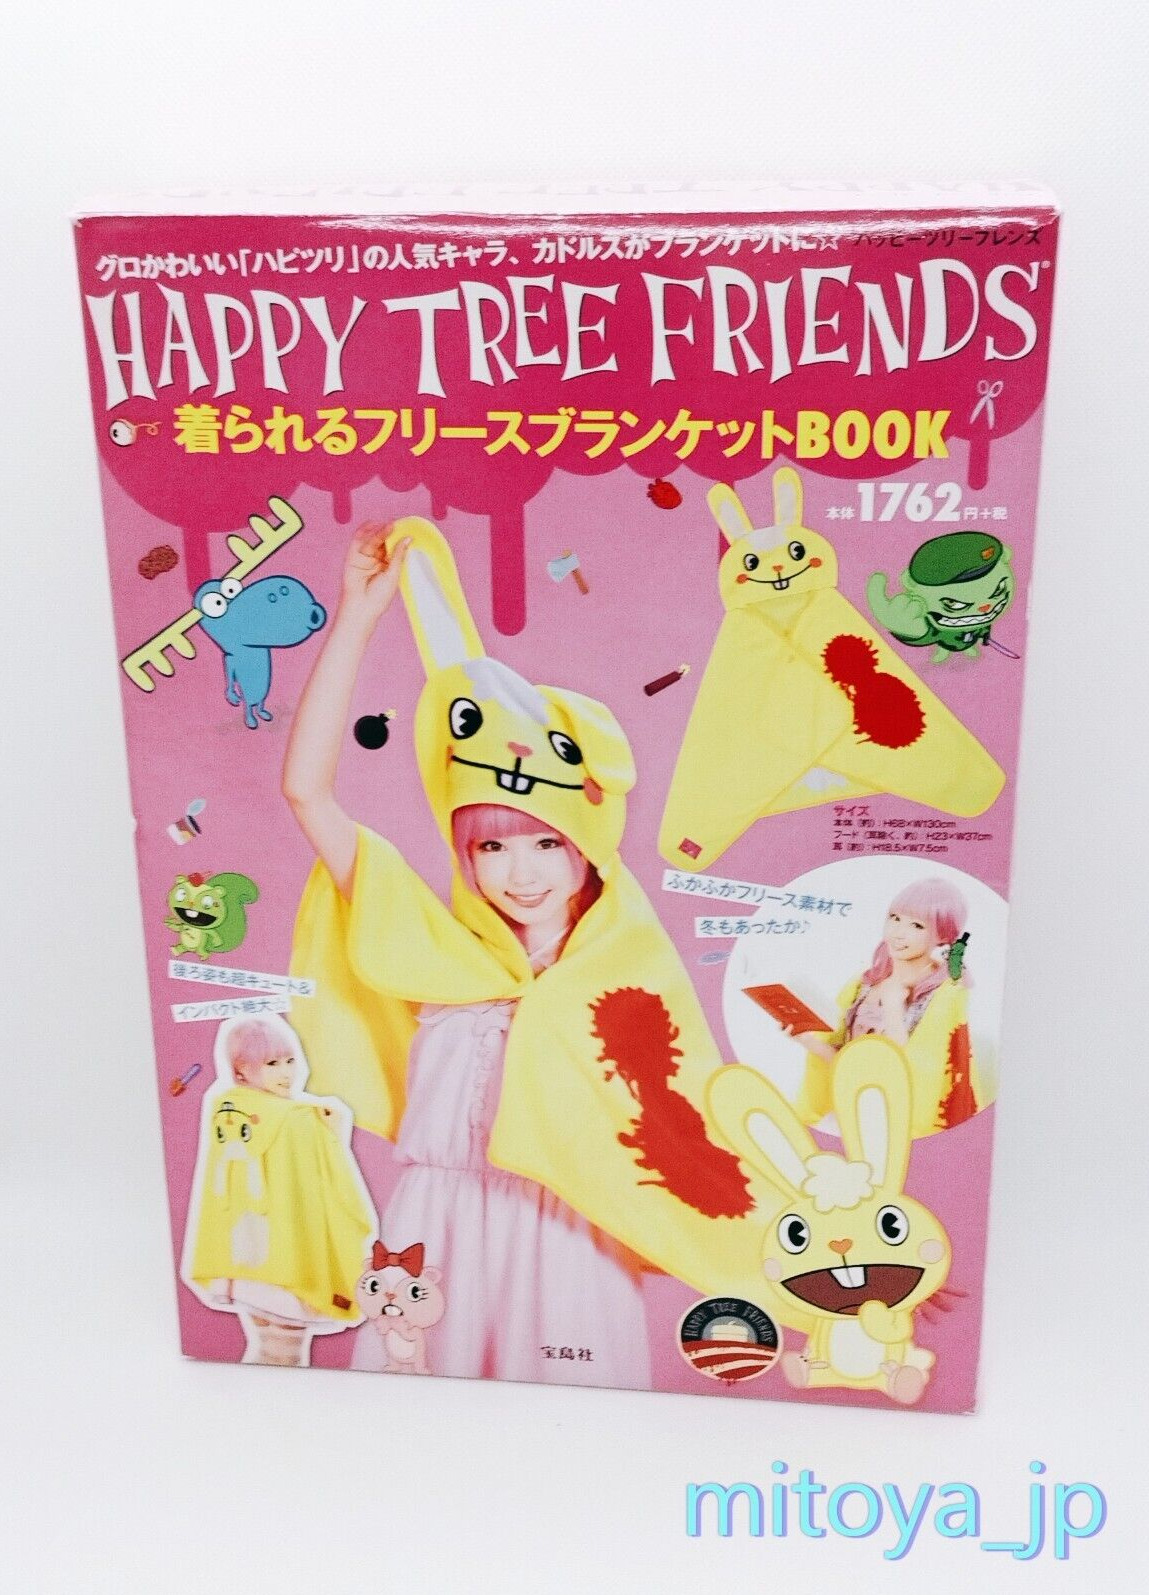 Happy Tree Friends Fleece Blanket Cuddles Hoodie Yellow Rabbit Kawaii Japan